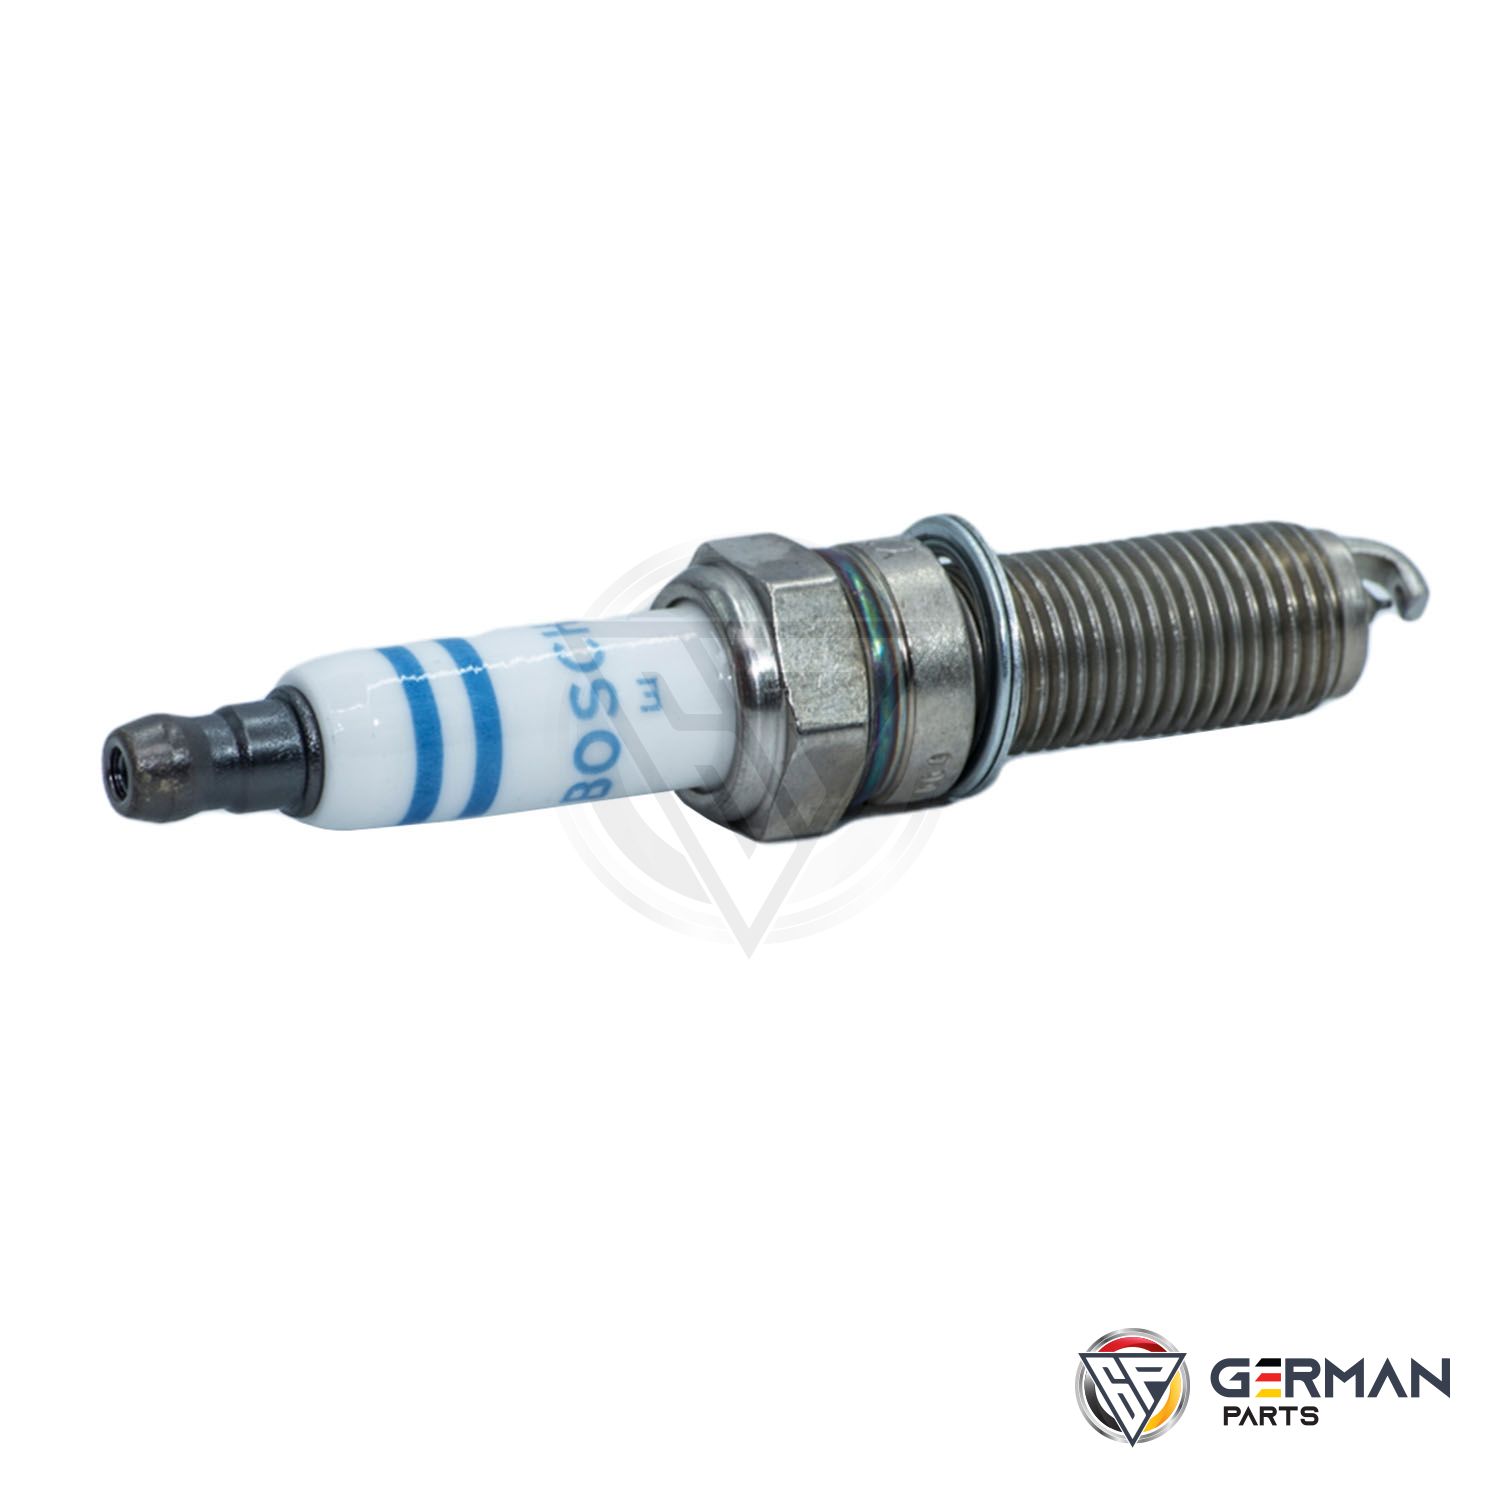 Buy Mercedes Benz Spark Plug 0041591803 - German Parts